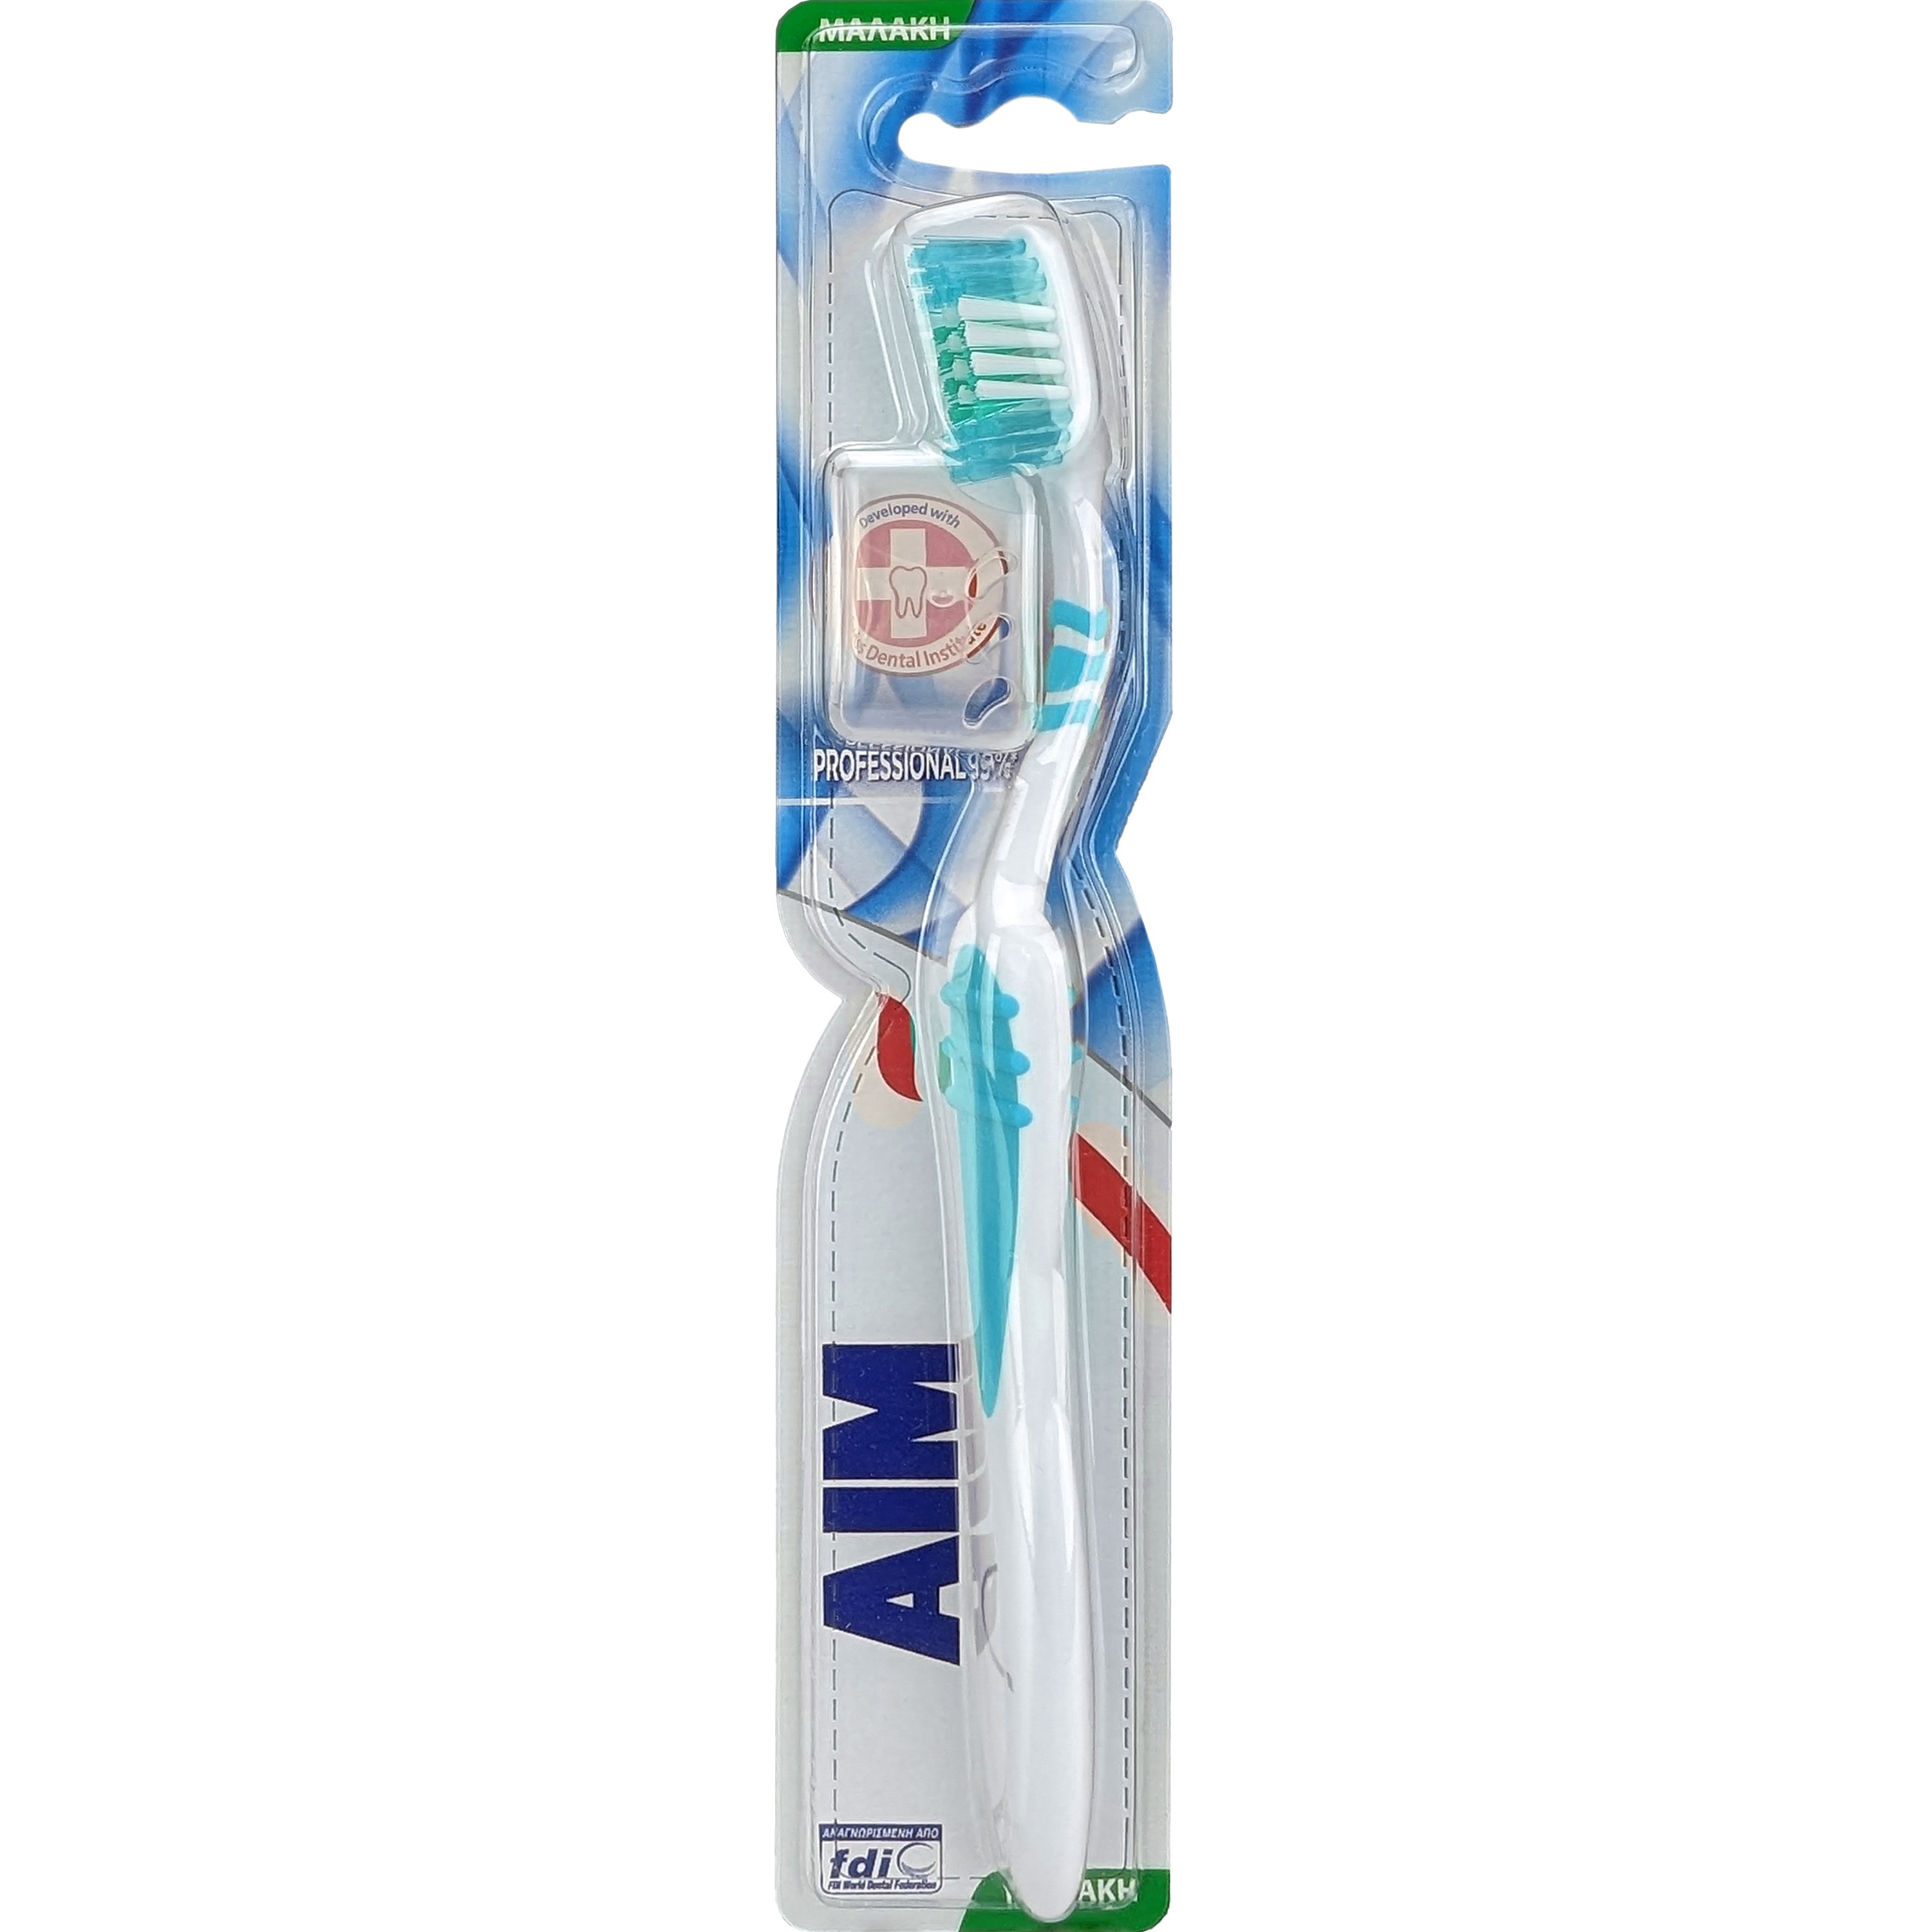 Aim Professional 99% Soft Toothbrush Γαλάζια Χειροκίνητη Οδοντόβουρτσα με Μαλακές Ίνες για Έως 99% Απομάκρυνση Υπολειμμάτων 1 Τεμάχιο